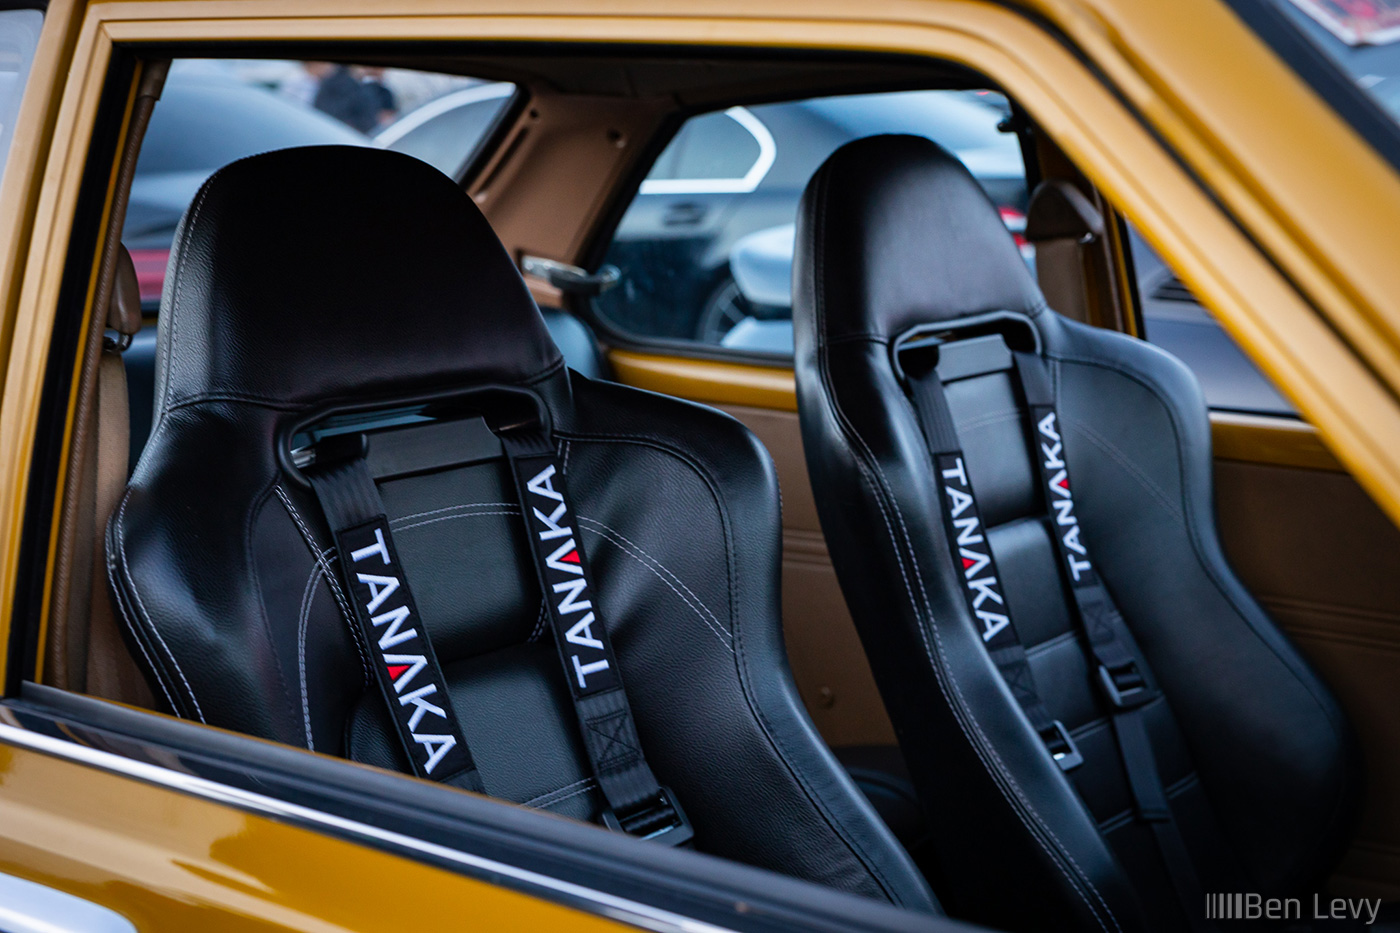 Black Bucket Seats in Toyota Corolla Coupe